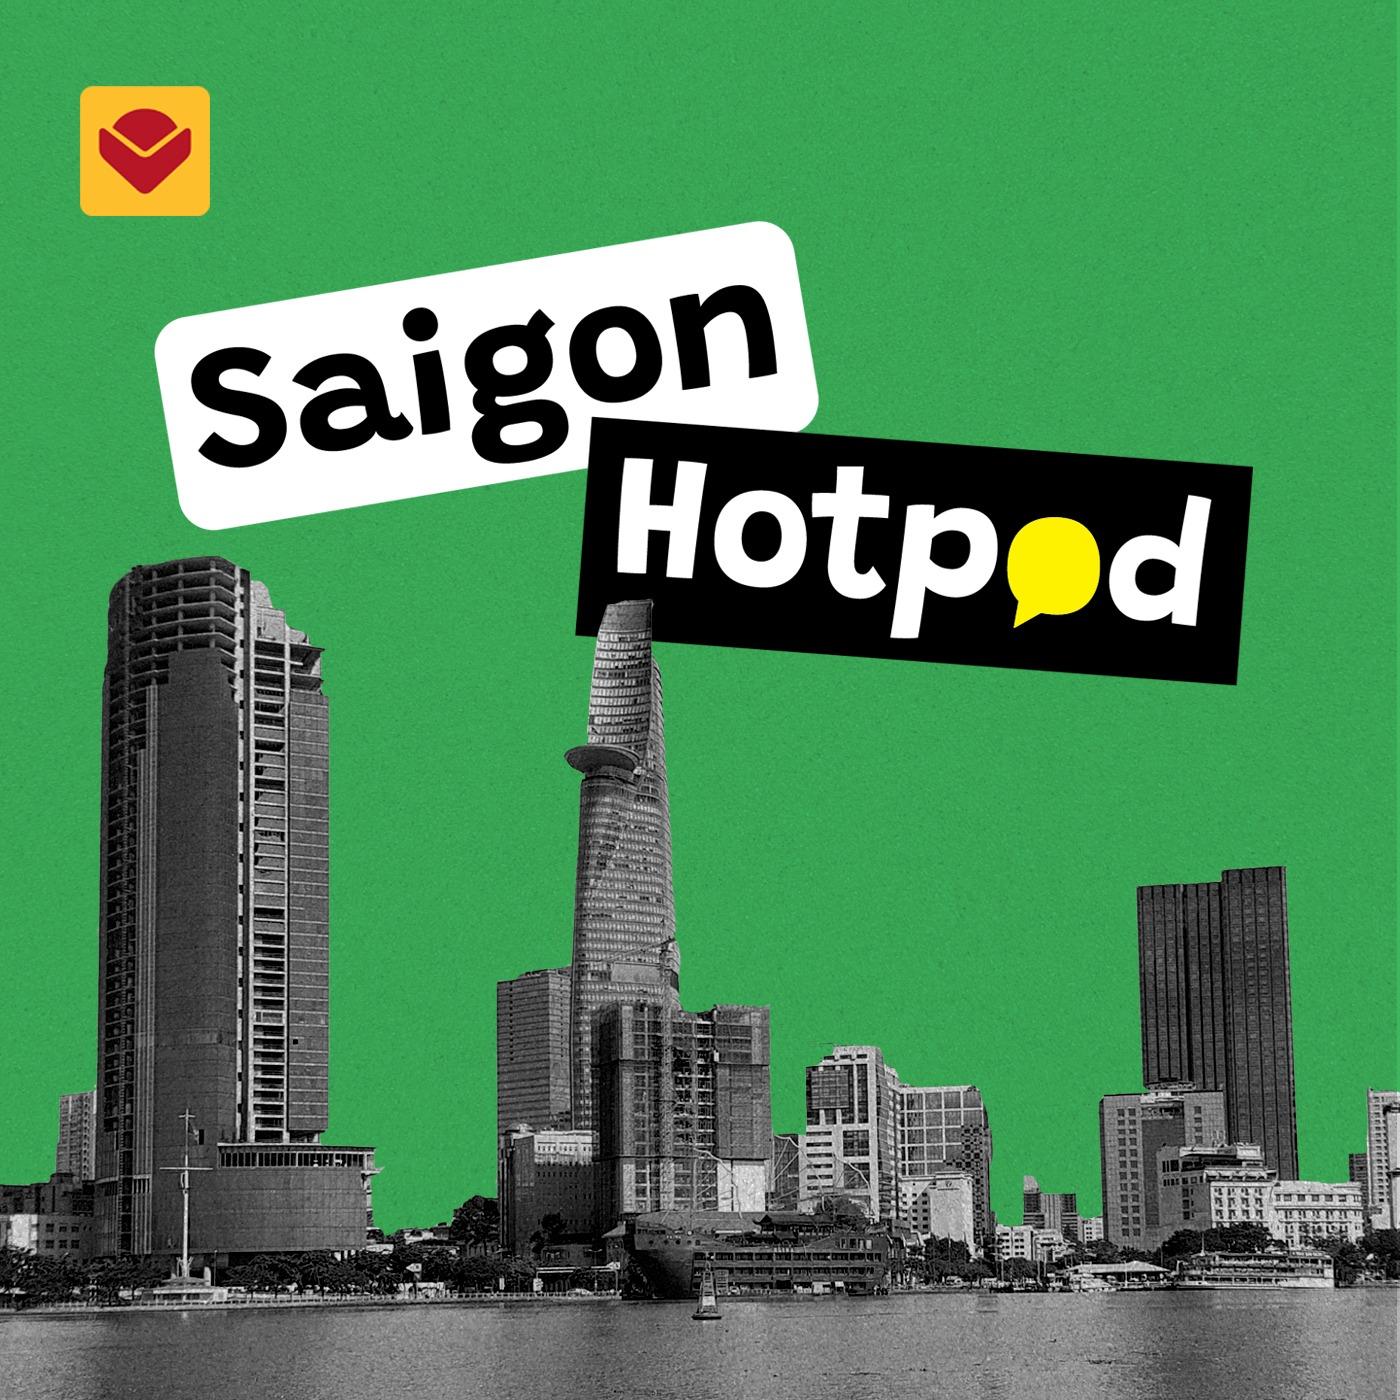 Saigon Hotpod